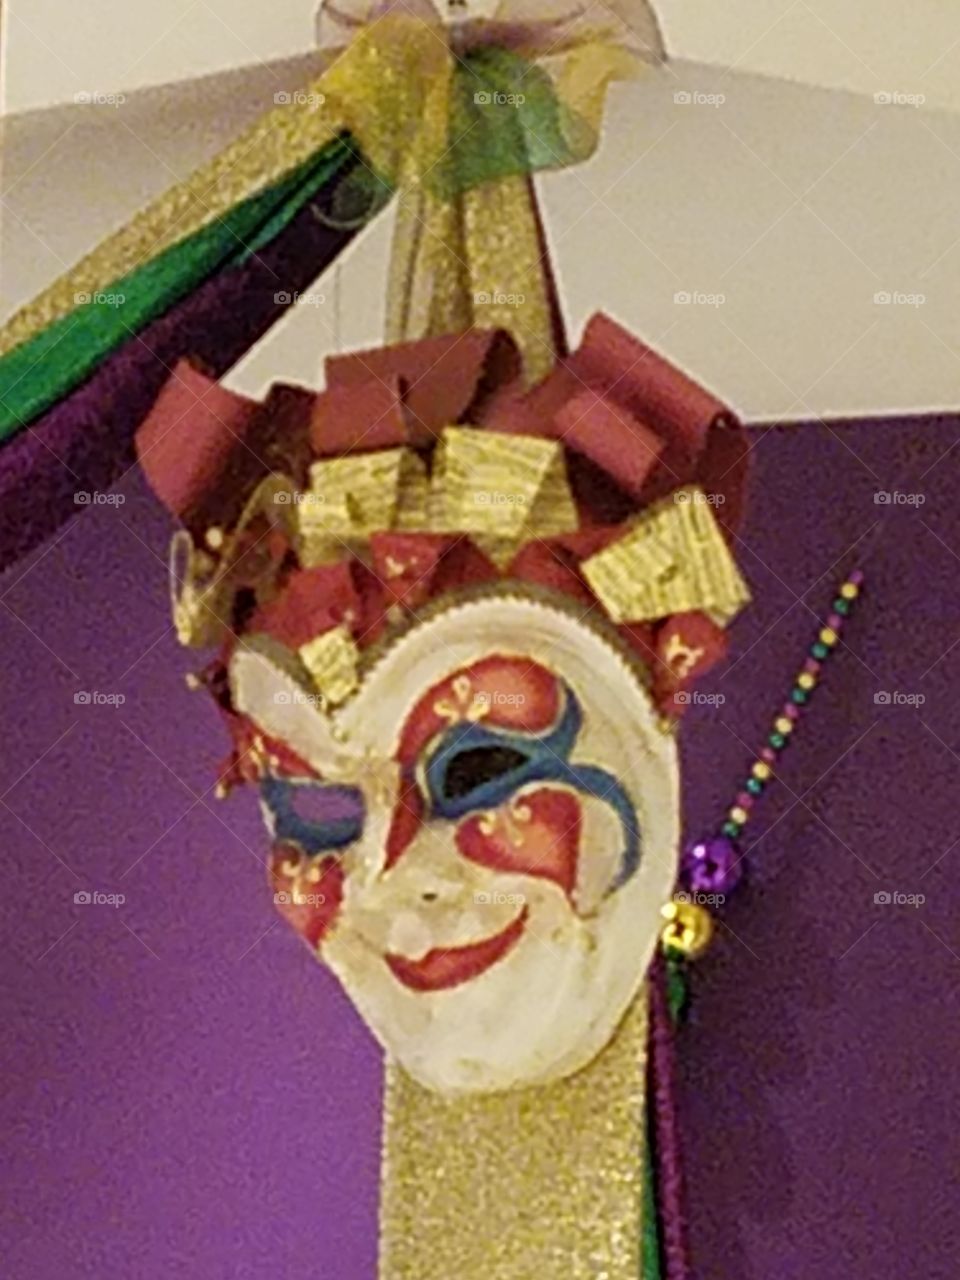 Mardi Gras masks, colorful